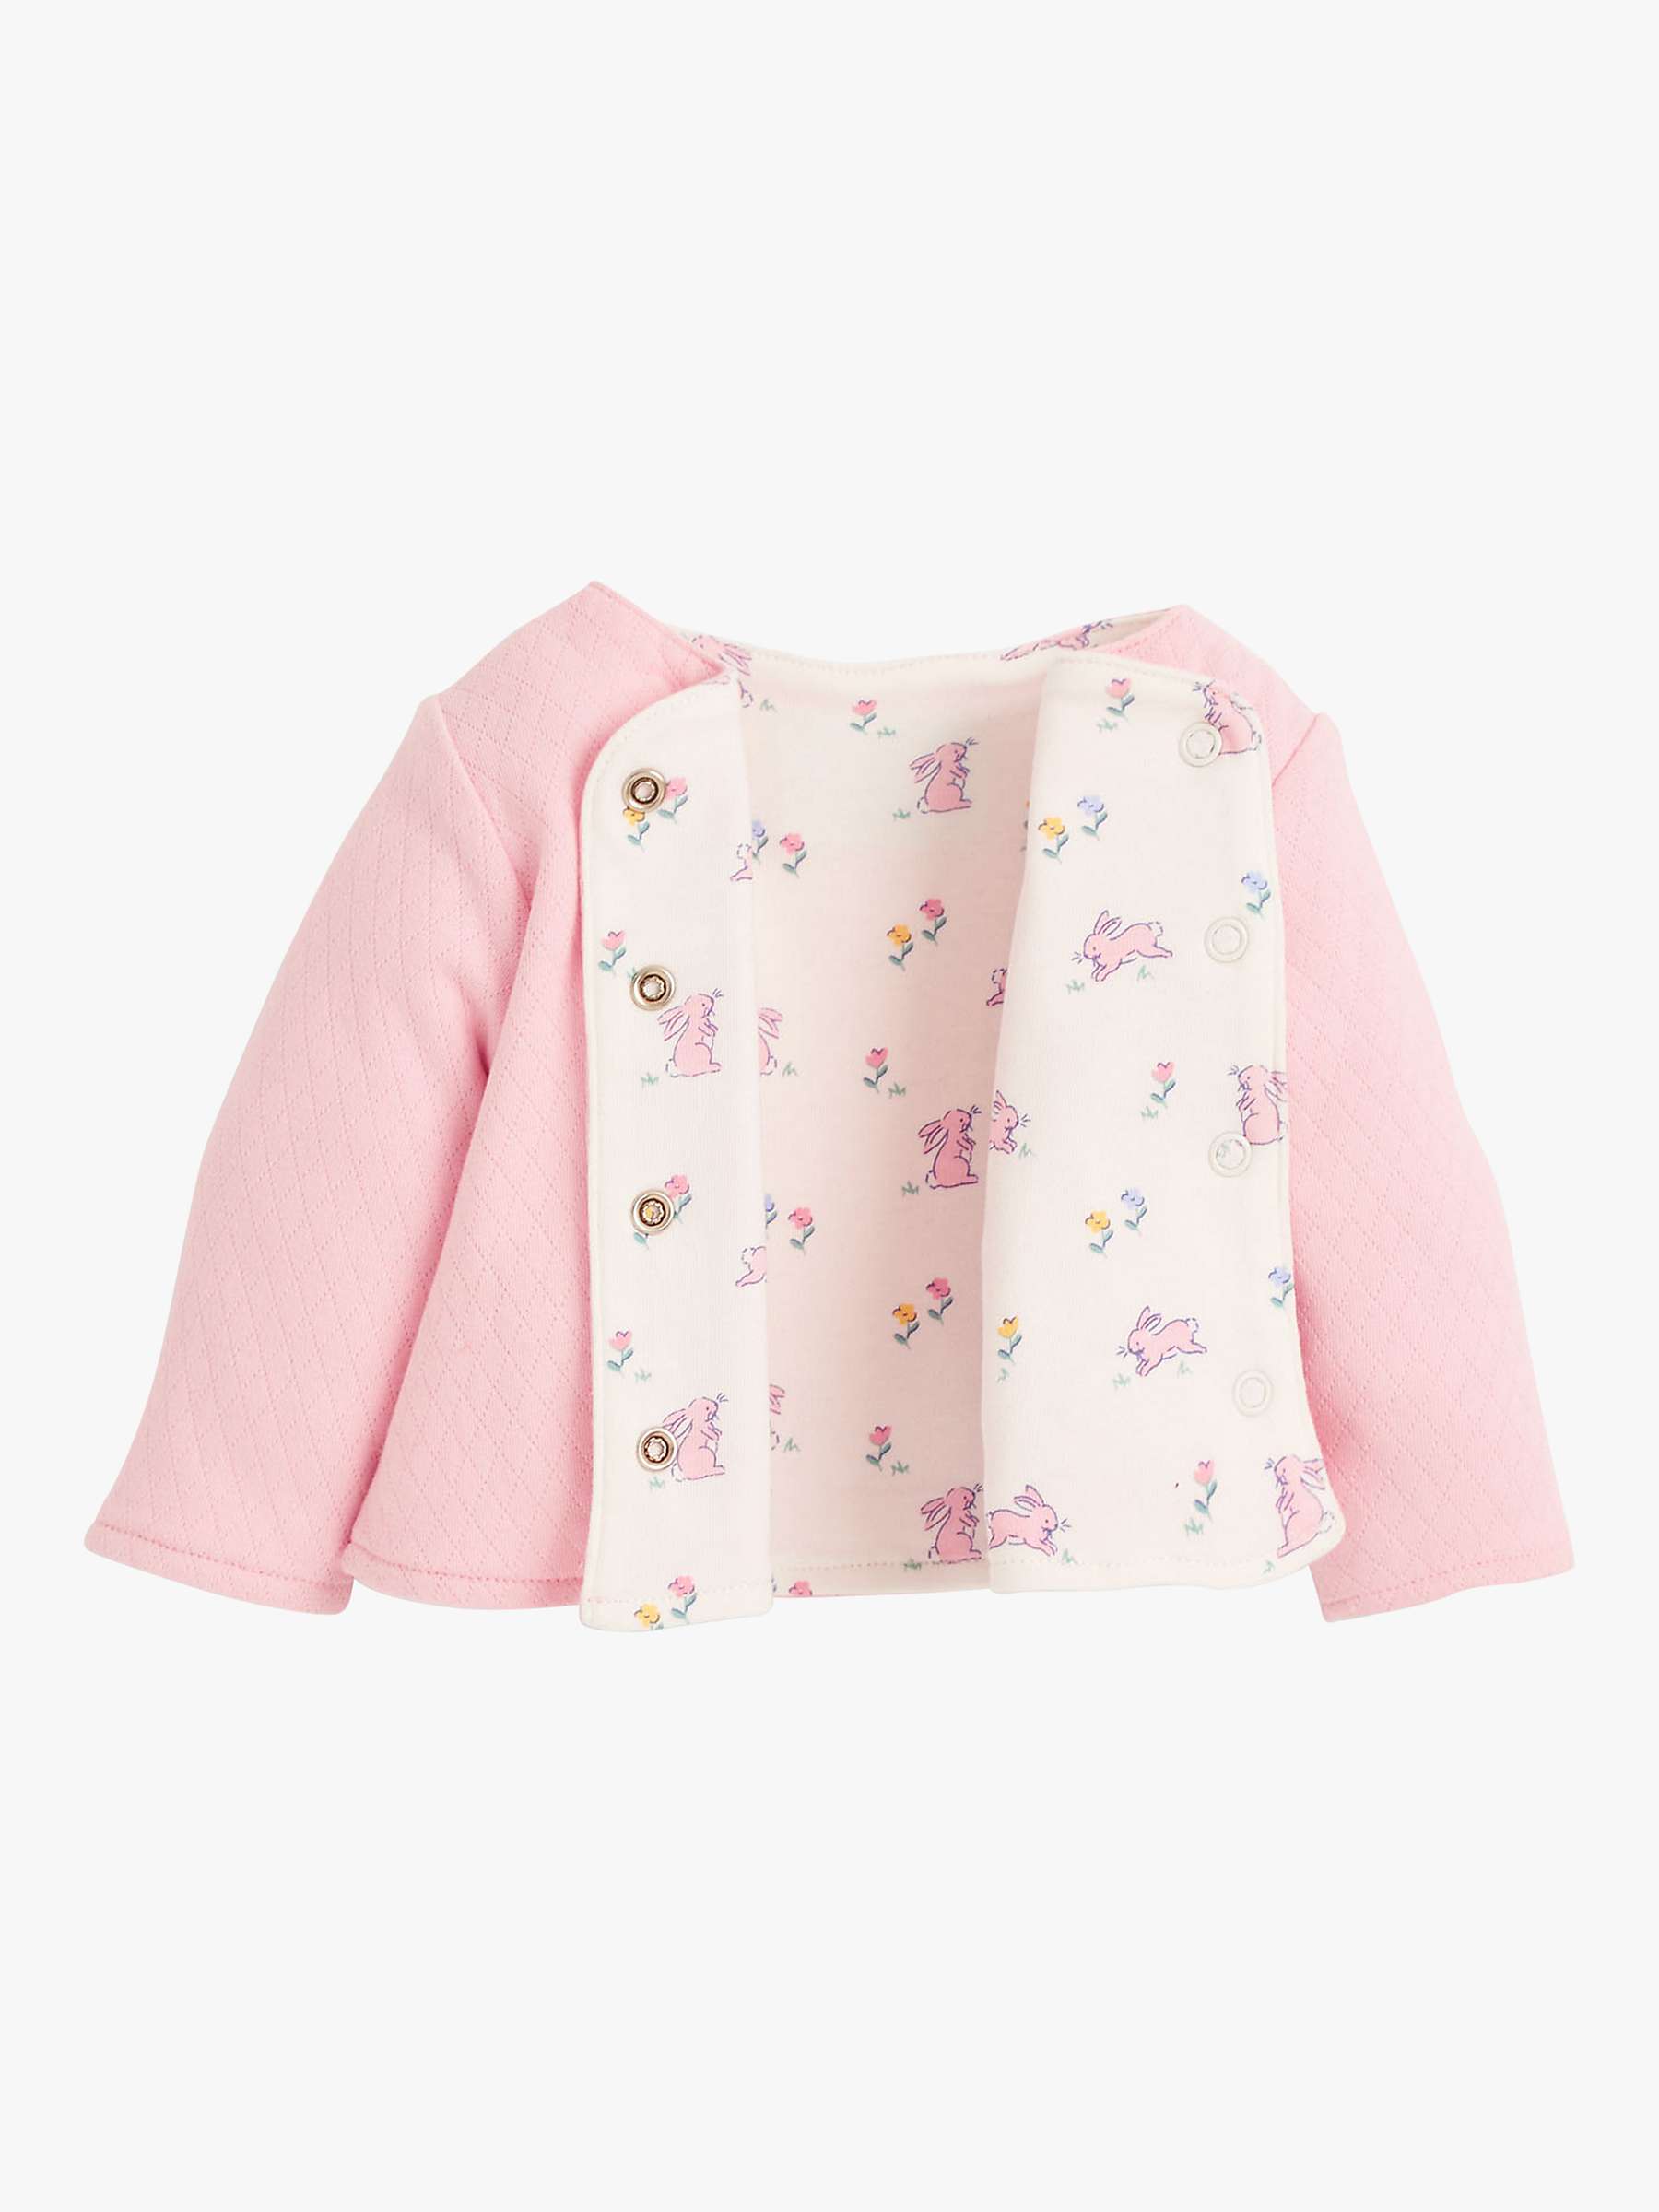 Buy JoJo Maman Bébé 2-Piece Bunny Sleepsuit & Jacket Set, Pink/White Online at johnlewis.com